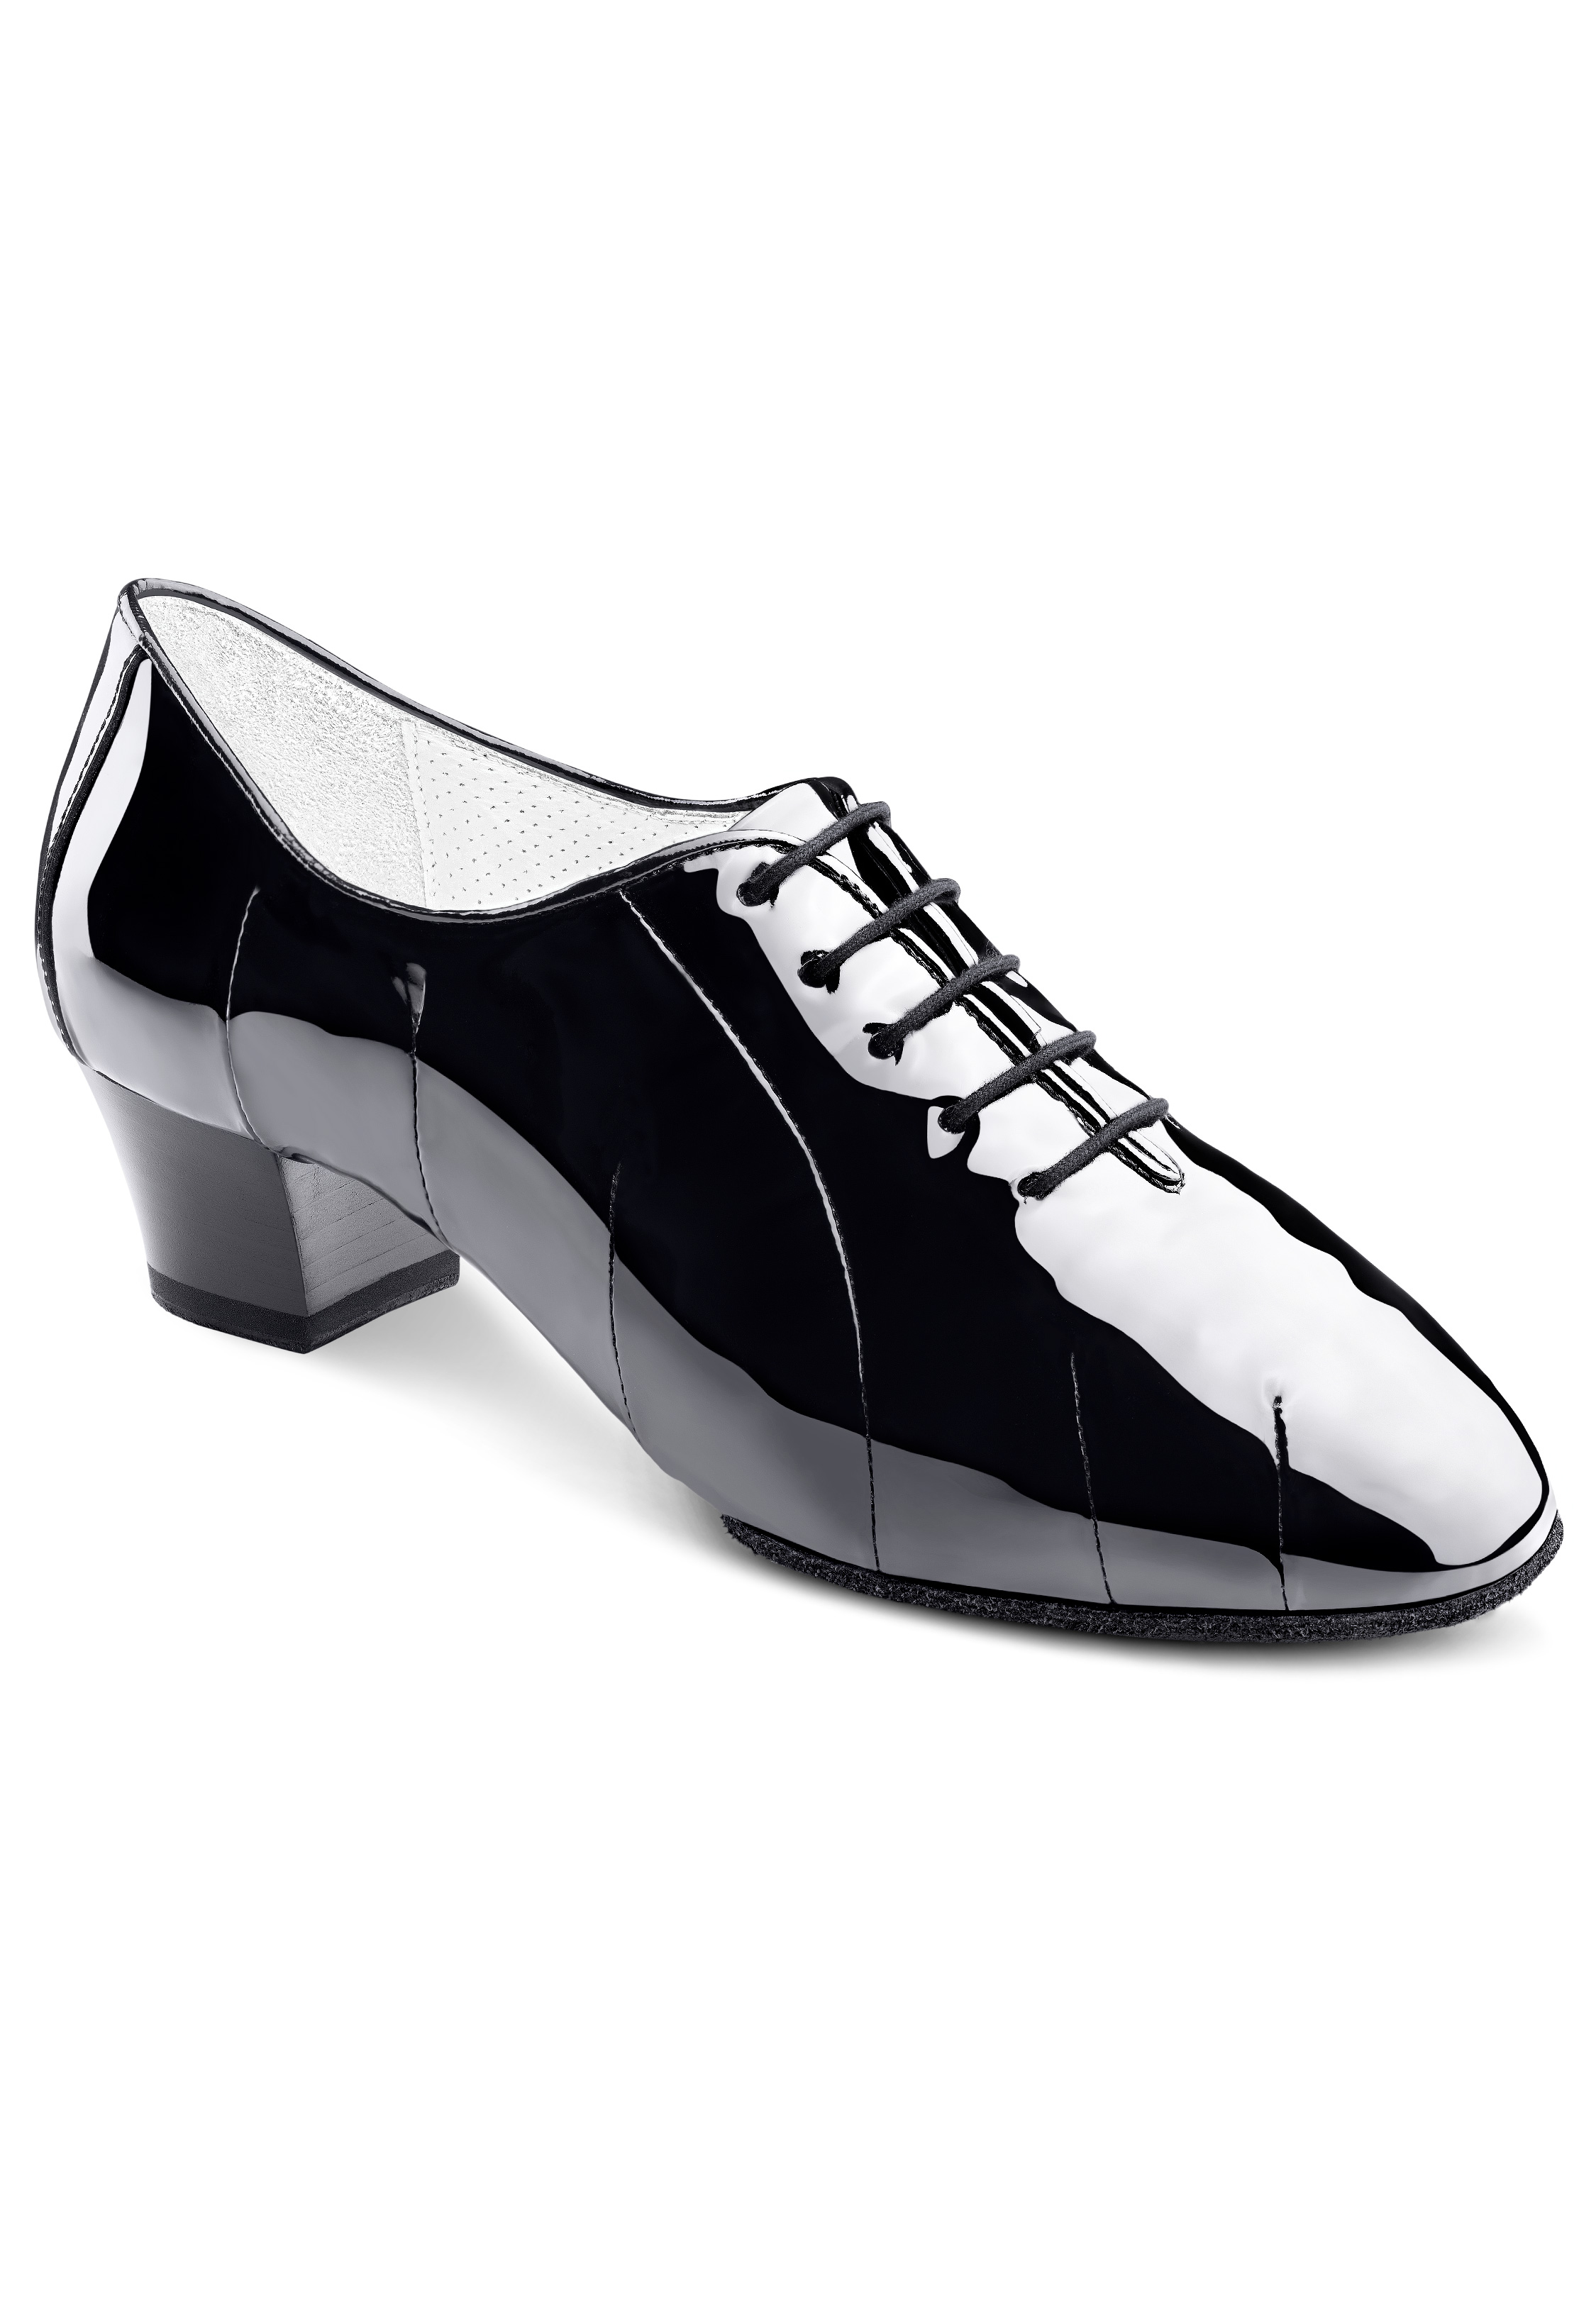 VCIXXVCE Men's Professional Latin Dance Shoes Lace-up Ballroom Tango Waltz Salsa Modern Dance Performance Shoes,Model 518 